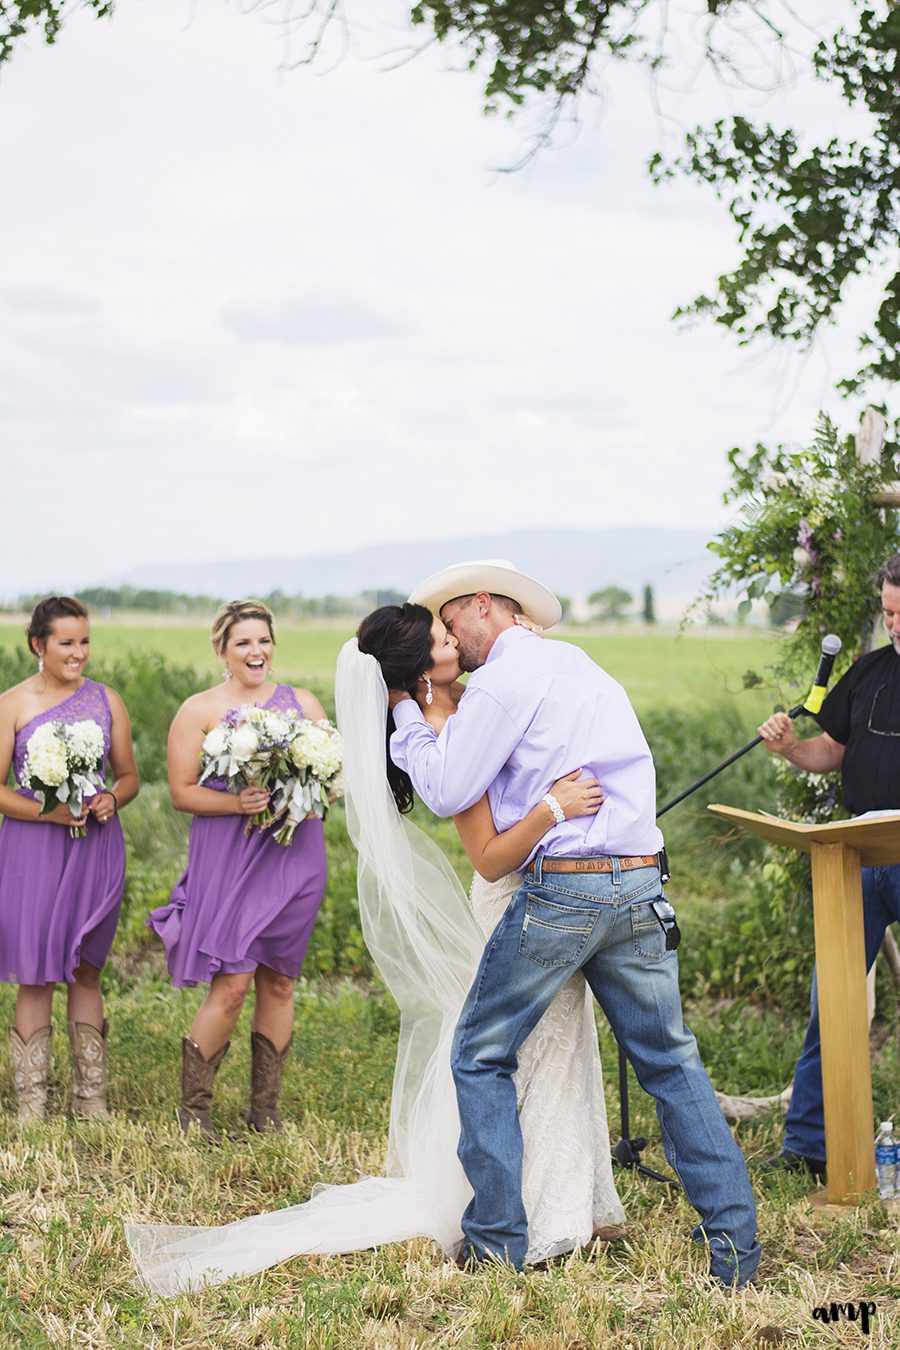 Colorado Ranch Wedding | Grand Junction wedding photographer